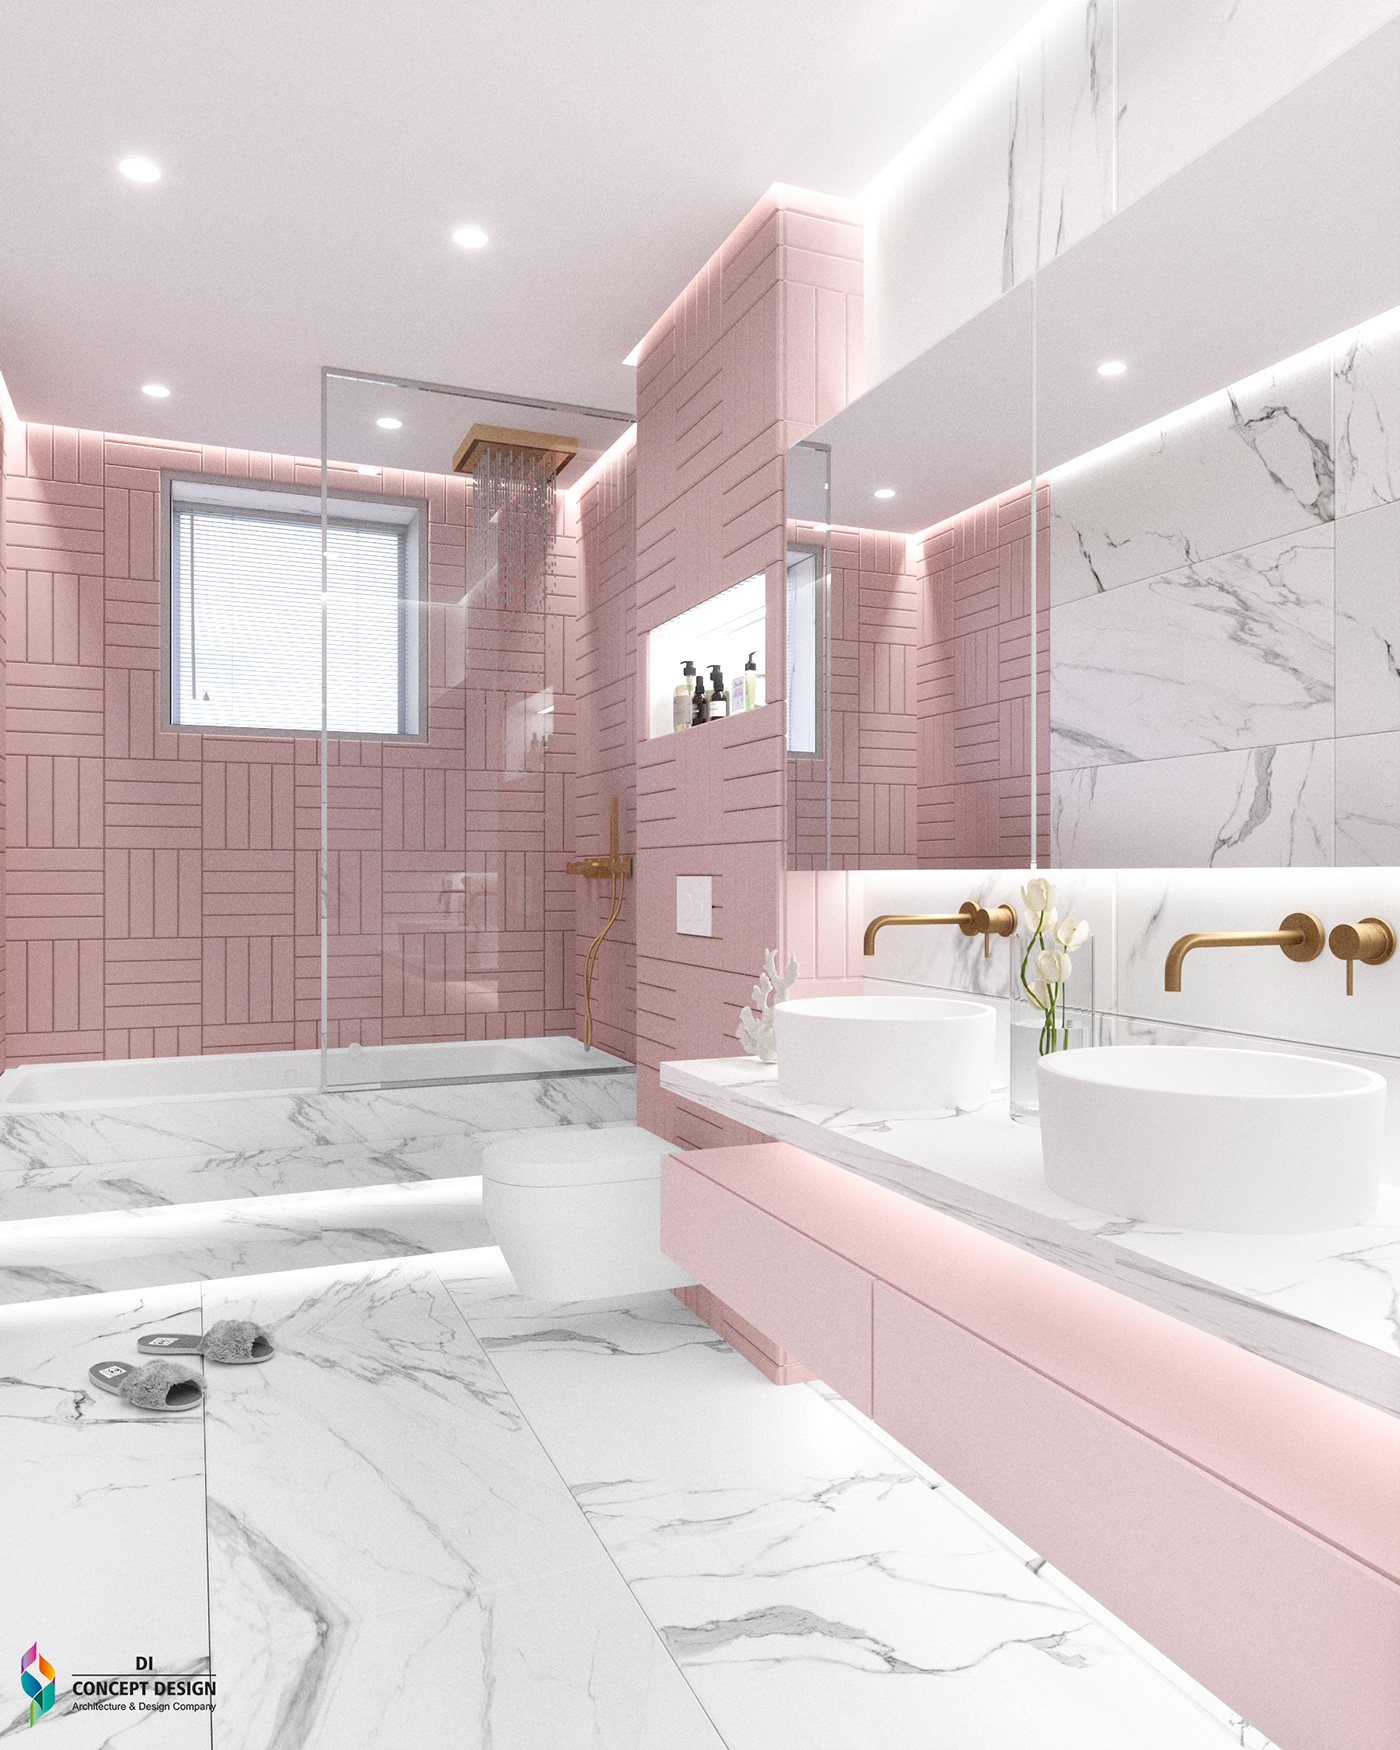 Image may contain: bathroom, sink and bathtub